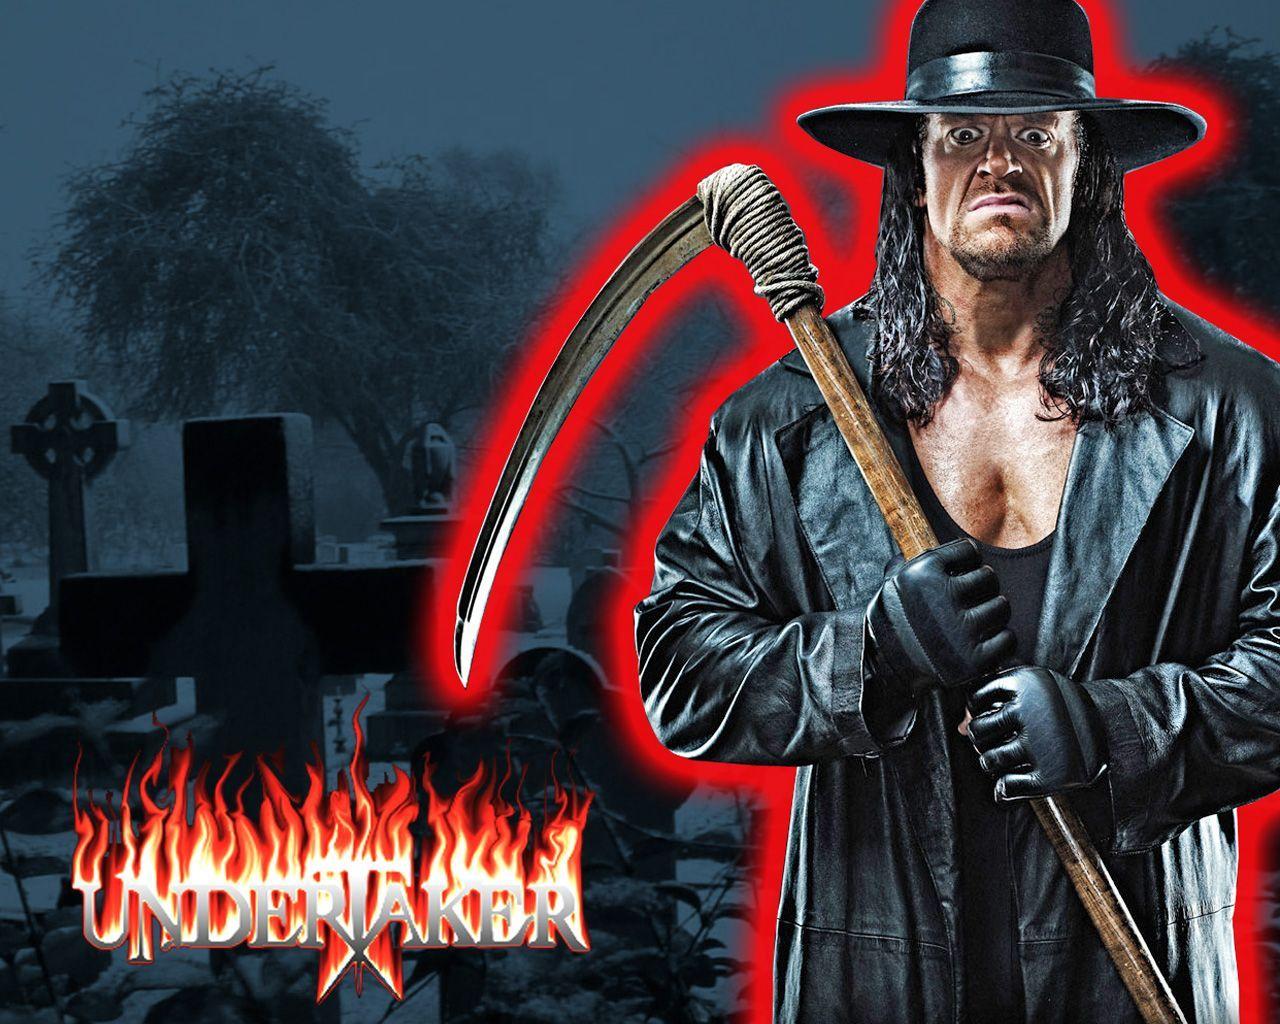 Cool little wallpaper of WWE's greatest: The Undertaker